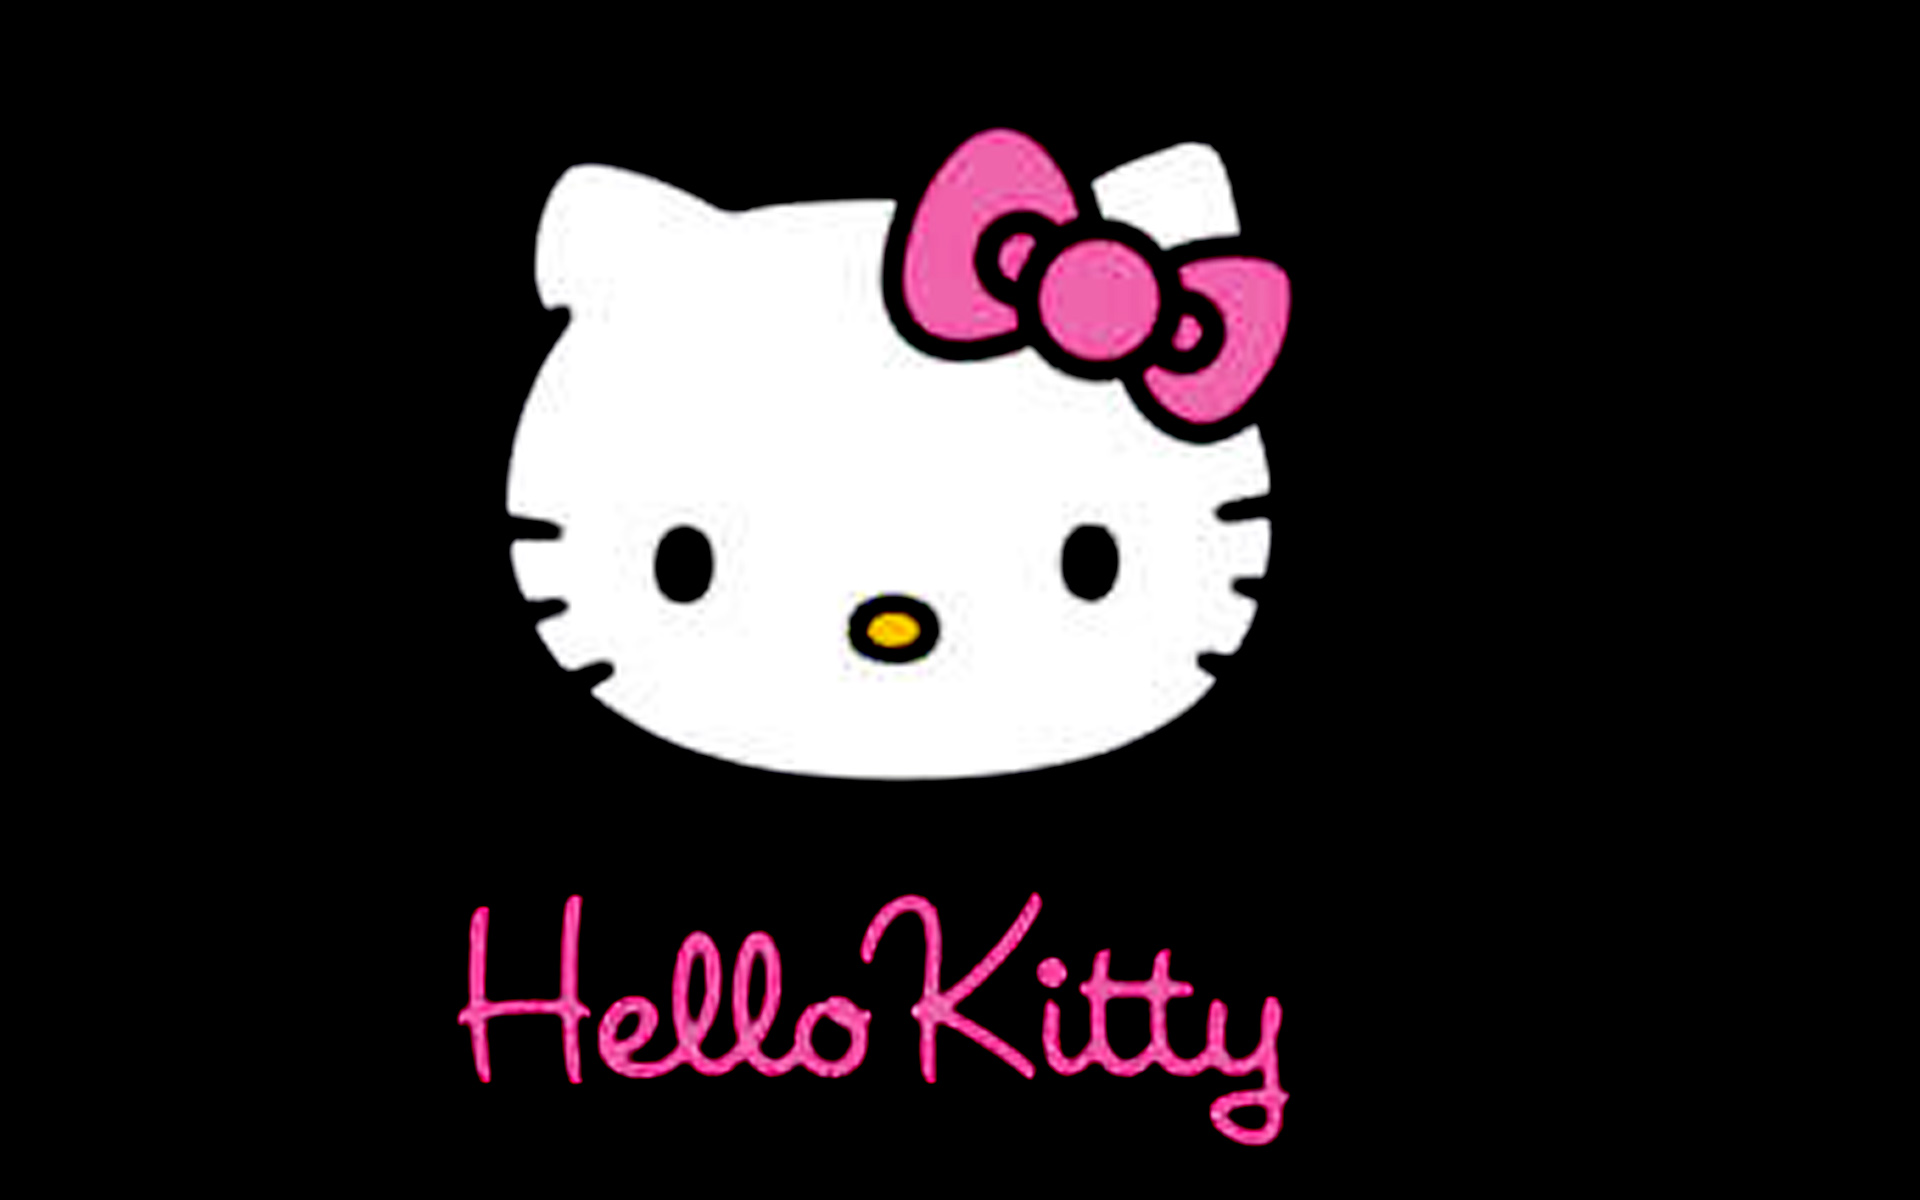 Download Hello Kitty Black Wallpaper 1920x1200 Full HD Wallpapers 1920x1200